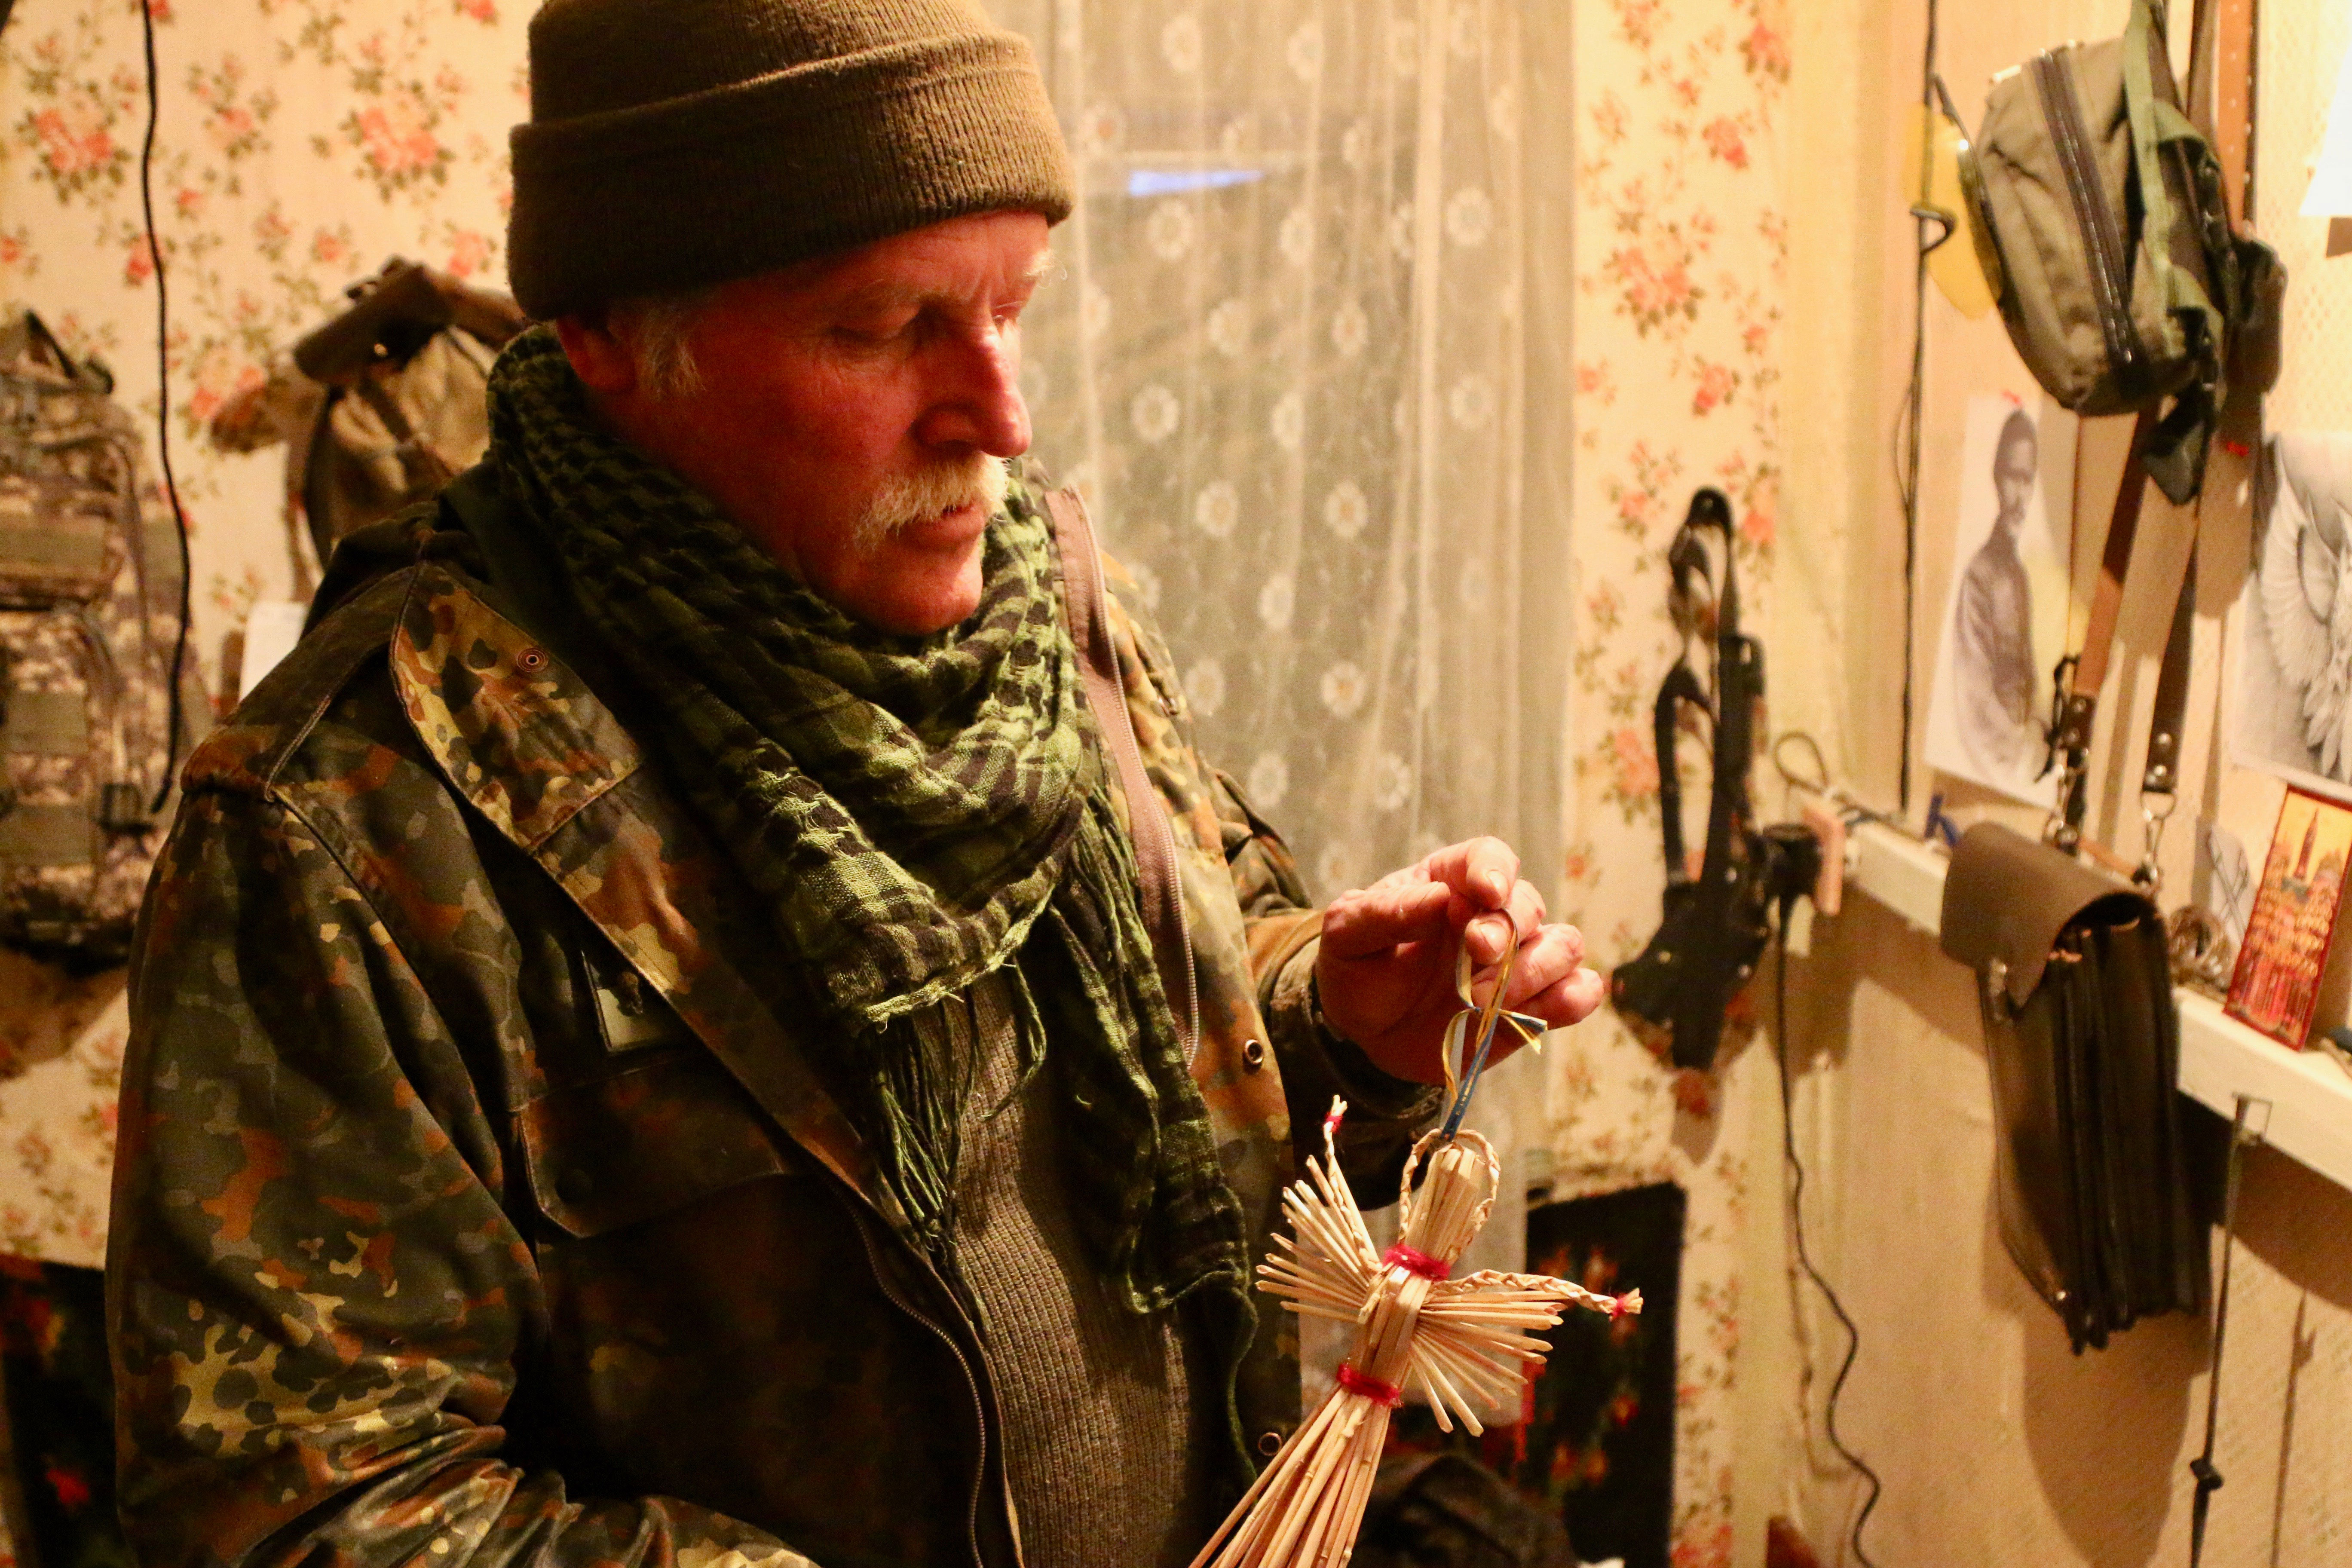 Ukrainian soldier Oleksandr Derevyanko, 54, inside a forward outpost in Taramchuk, Ukraine.